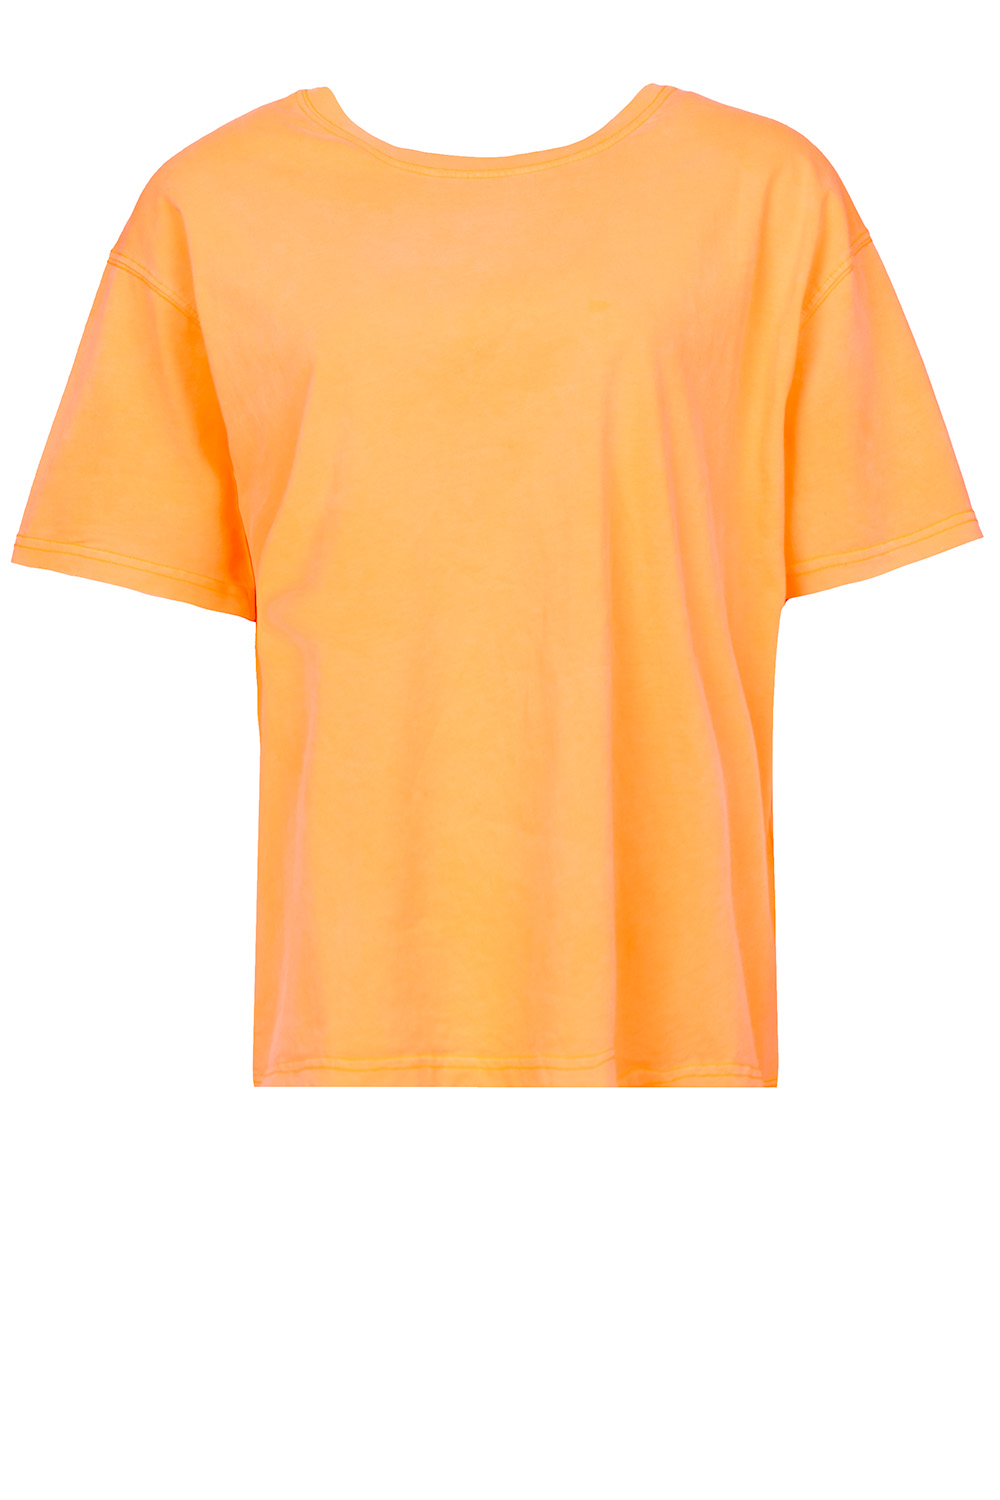 American vintage Boxy t-shirt Fizvalley oranje